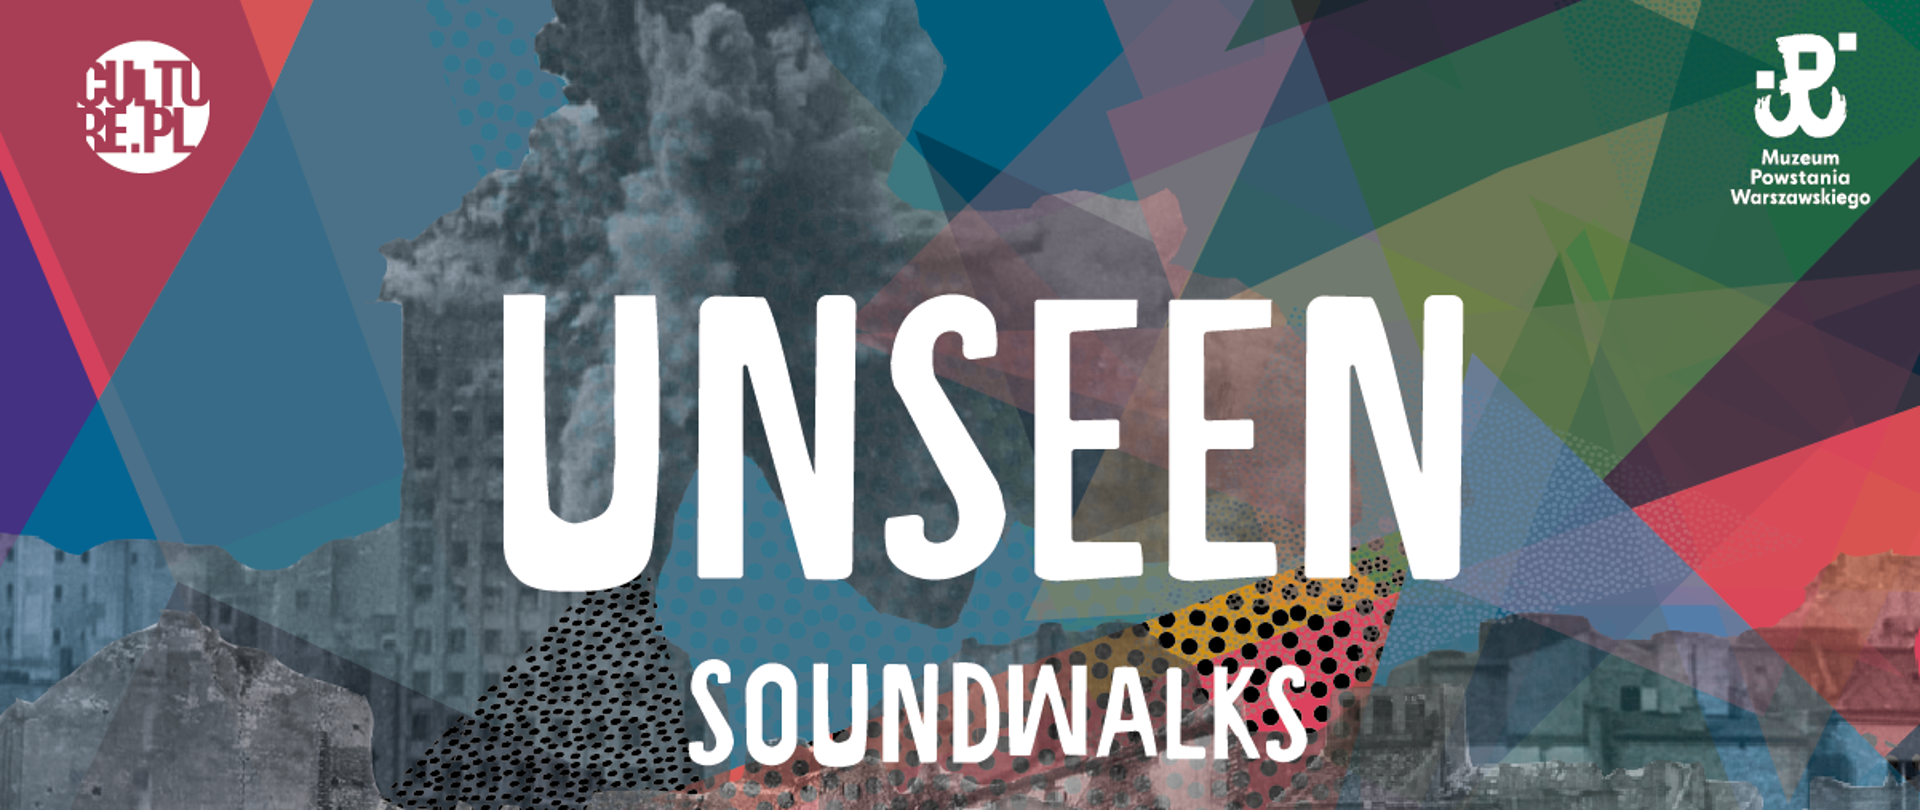 "Unseen Soundwalks: Powstanie Warszawskie ’44"